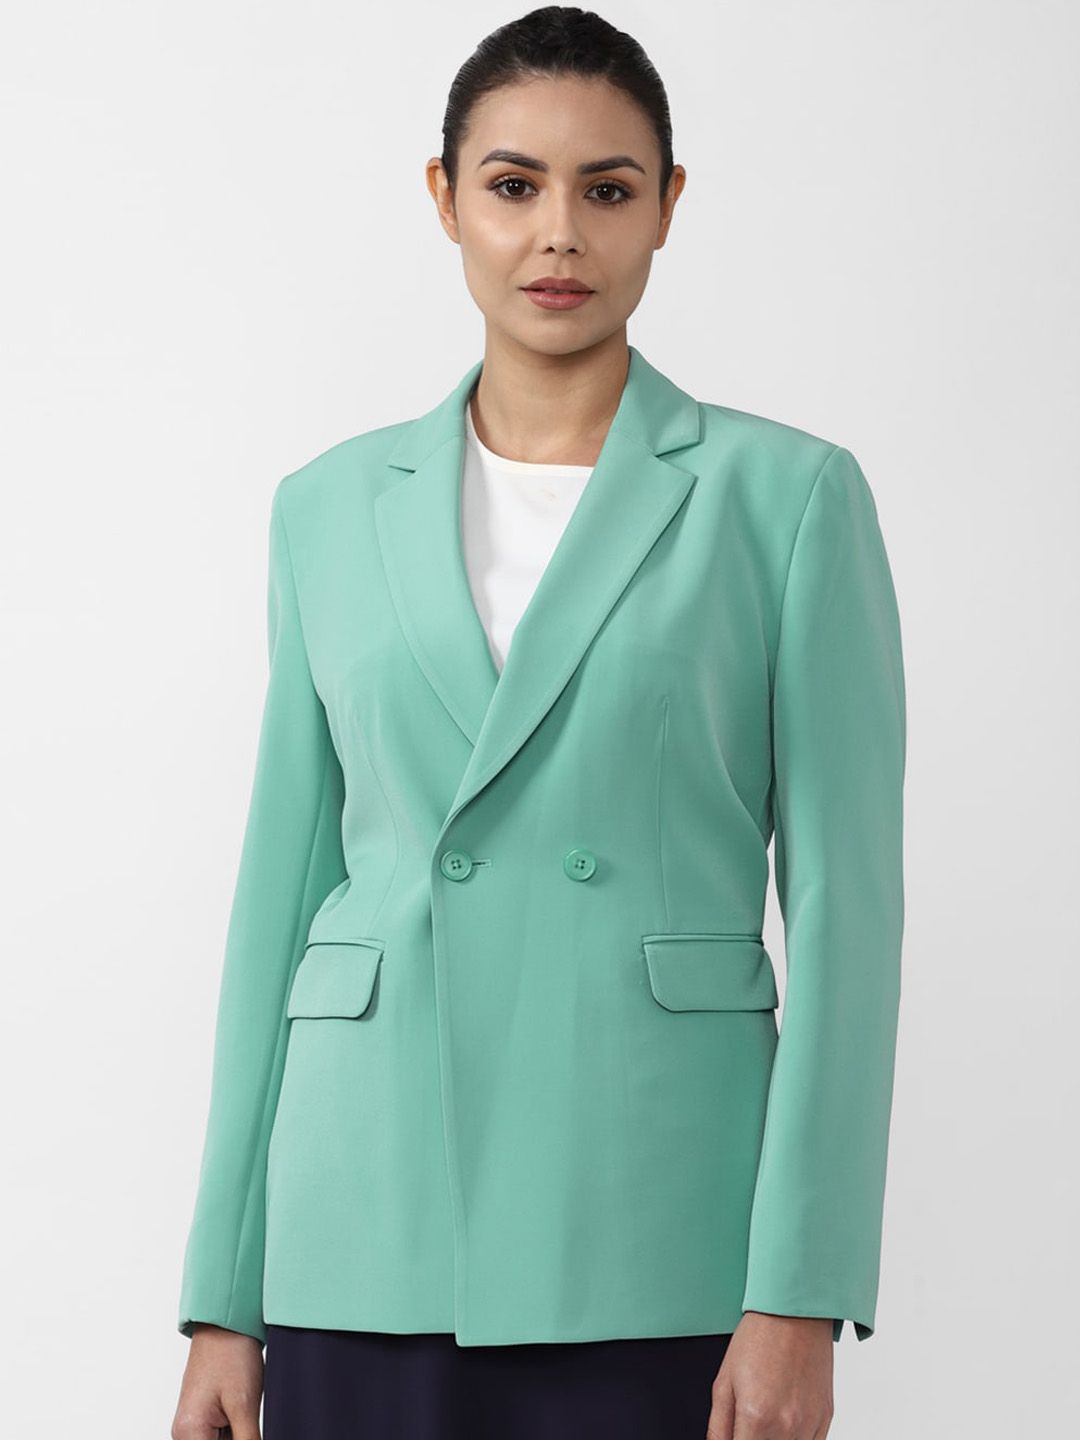 Van Heusen Woman Green Solid Single-Breasted Formal Blazer Price in India